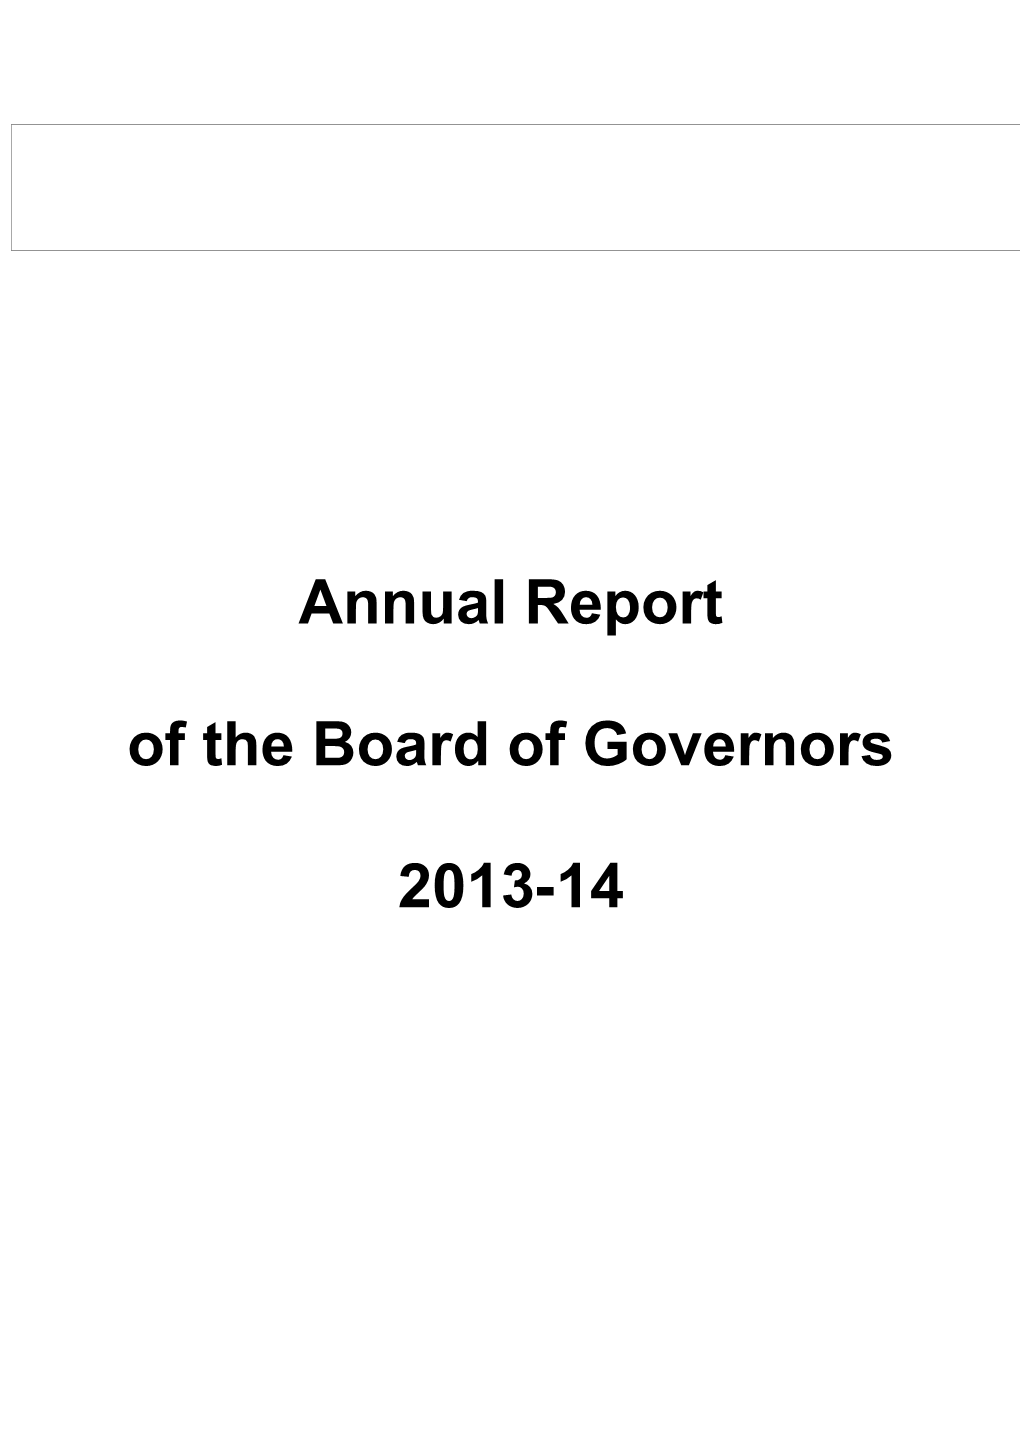 Board of Governors Designation